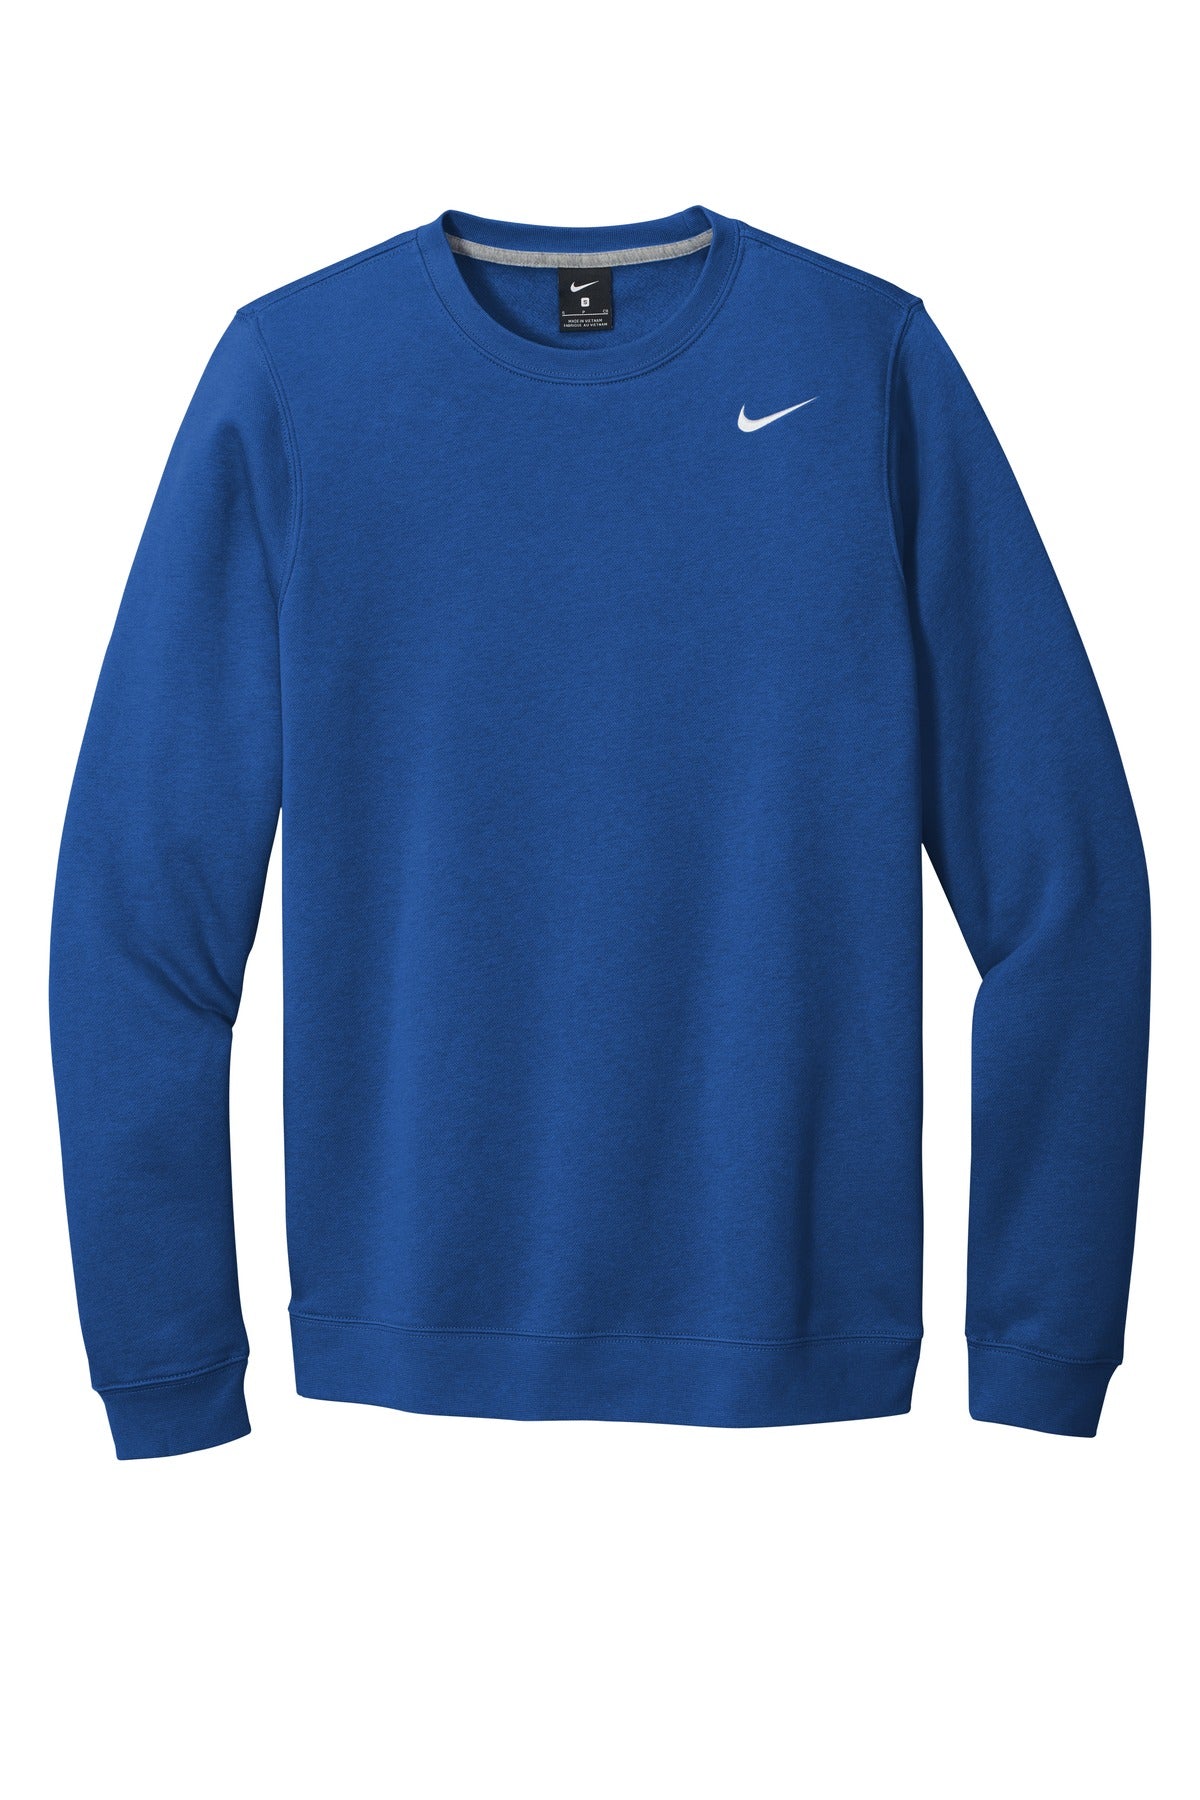 Nike Club Fleece Crew CJ1614 - BT Imprintables Shirts